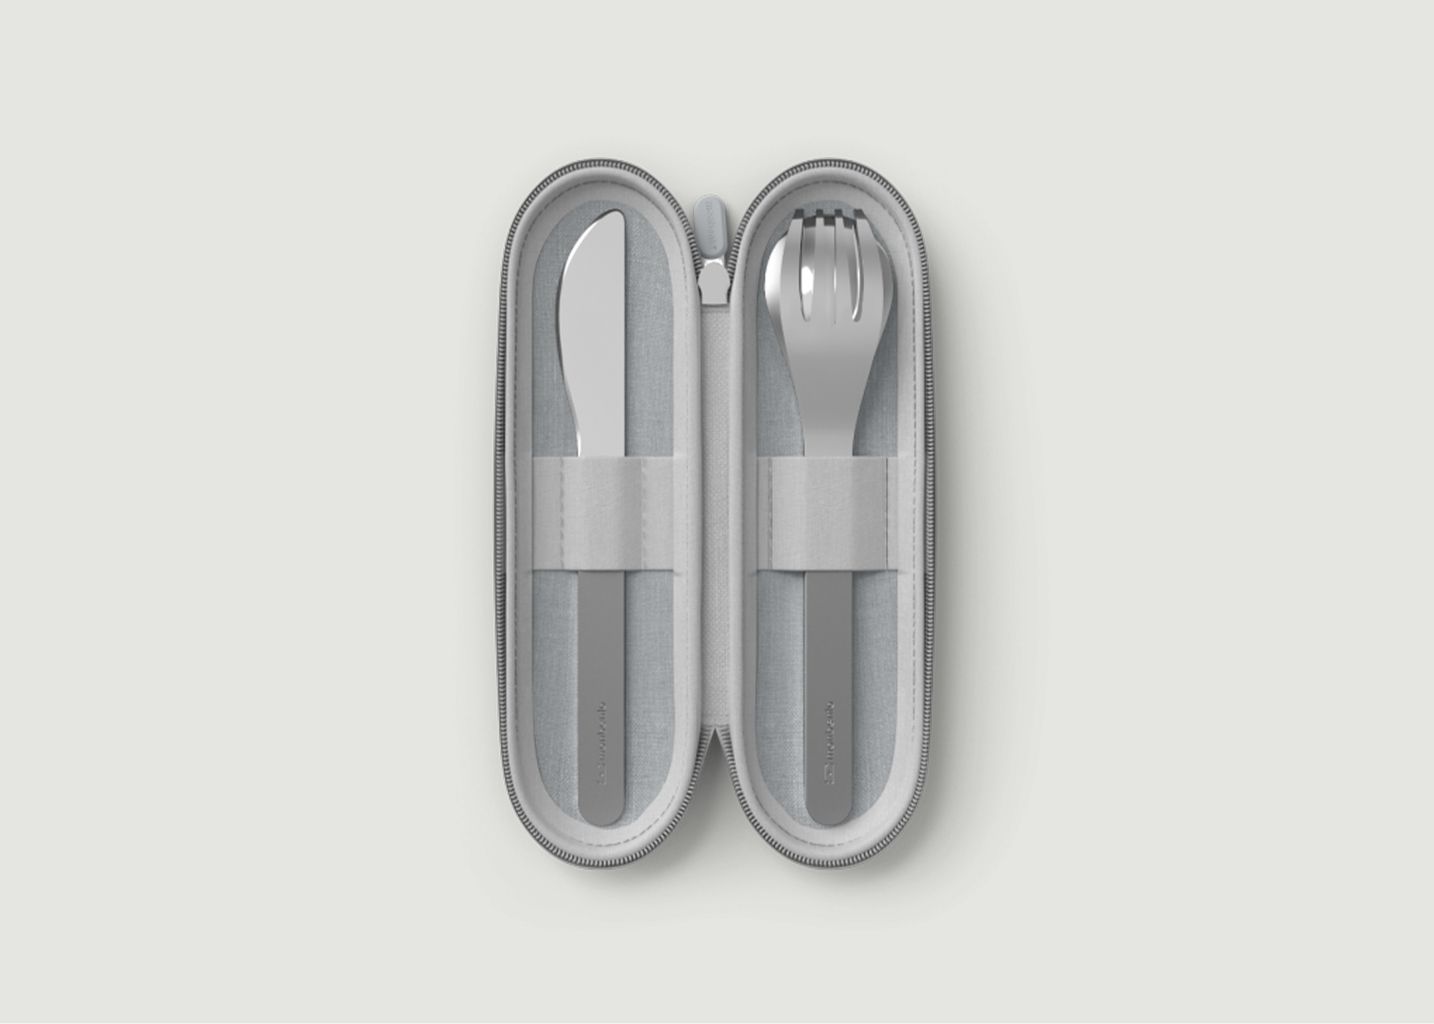 MB Slim Nest trio knife - Nomadic cutlery and textile case - monbento